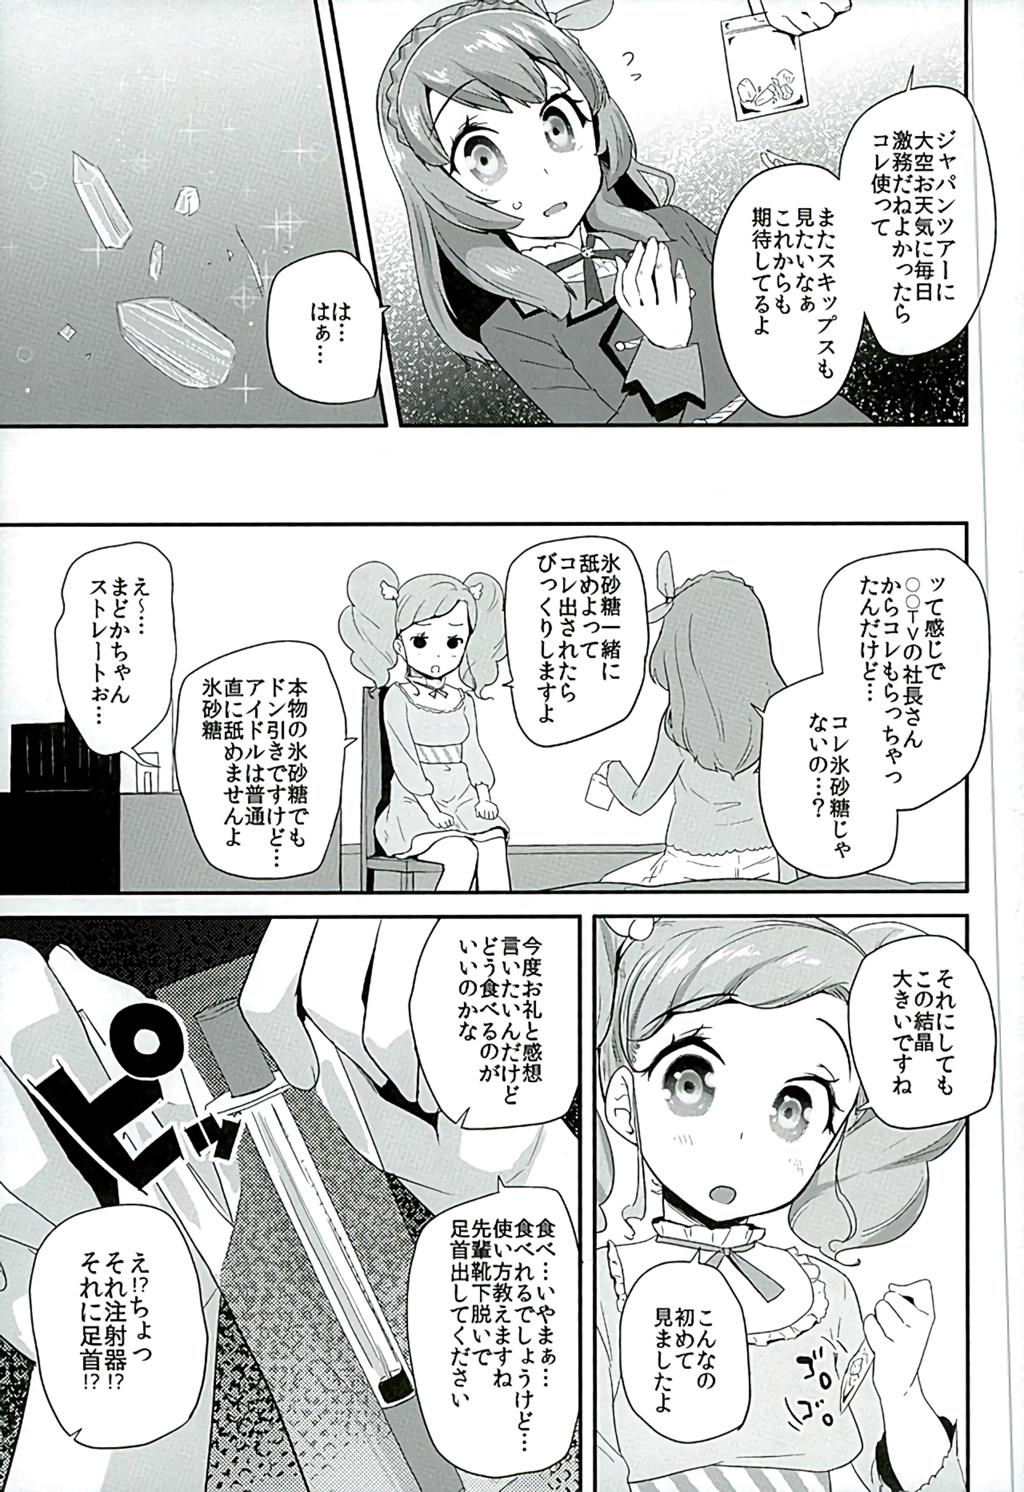 Young Tri Tri Trips! - Aikatsu Hermosa - Page 4